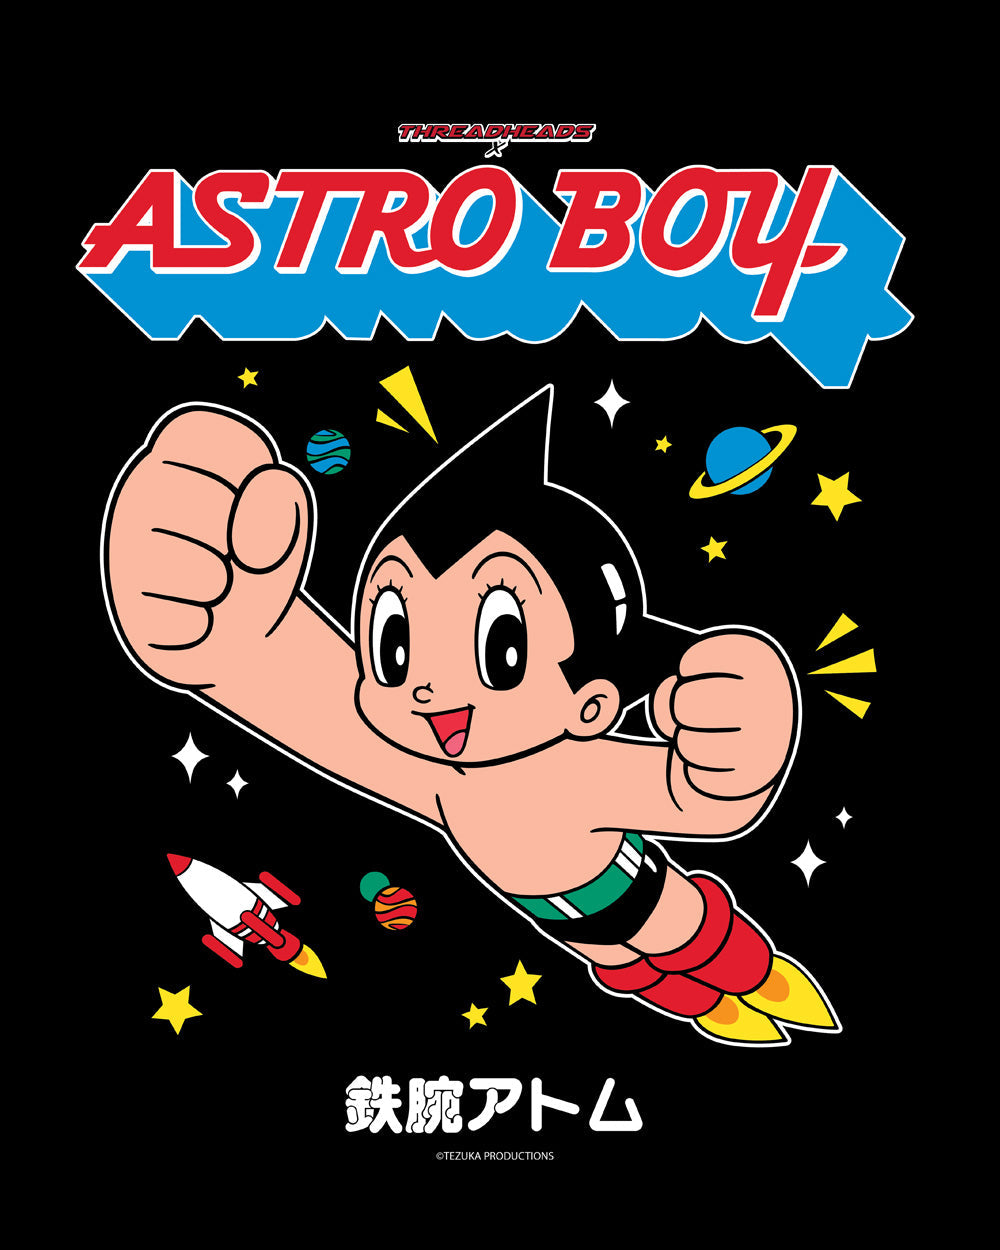 Astro Boy Classic Japanese Anime Manga Cartoon Comic Superhero Retro Vintage Officially Licensed Cotton T-Shirt